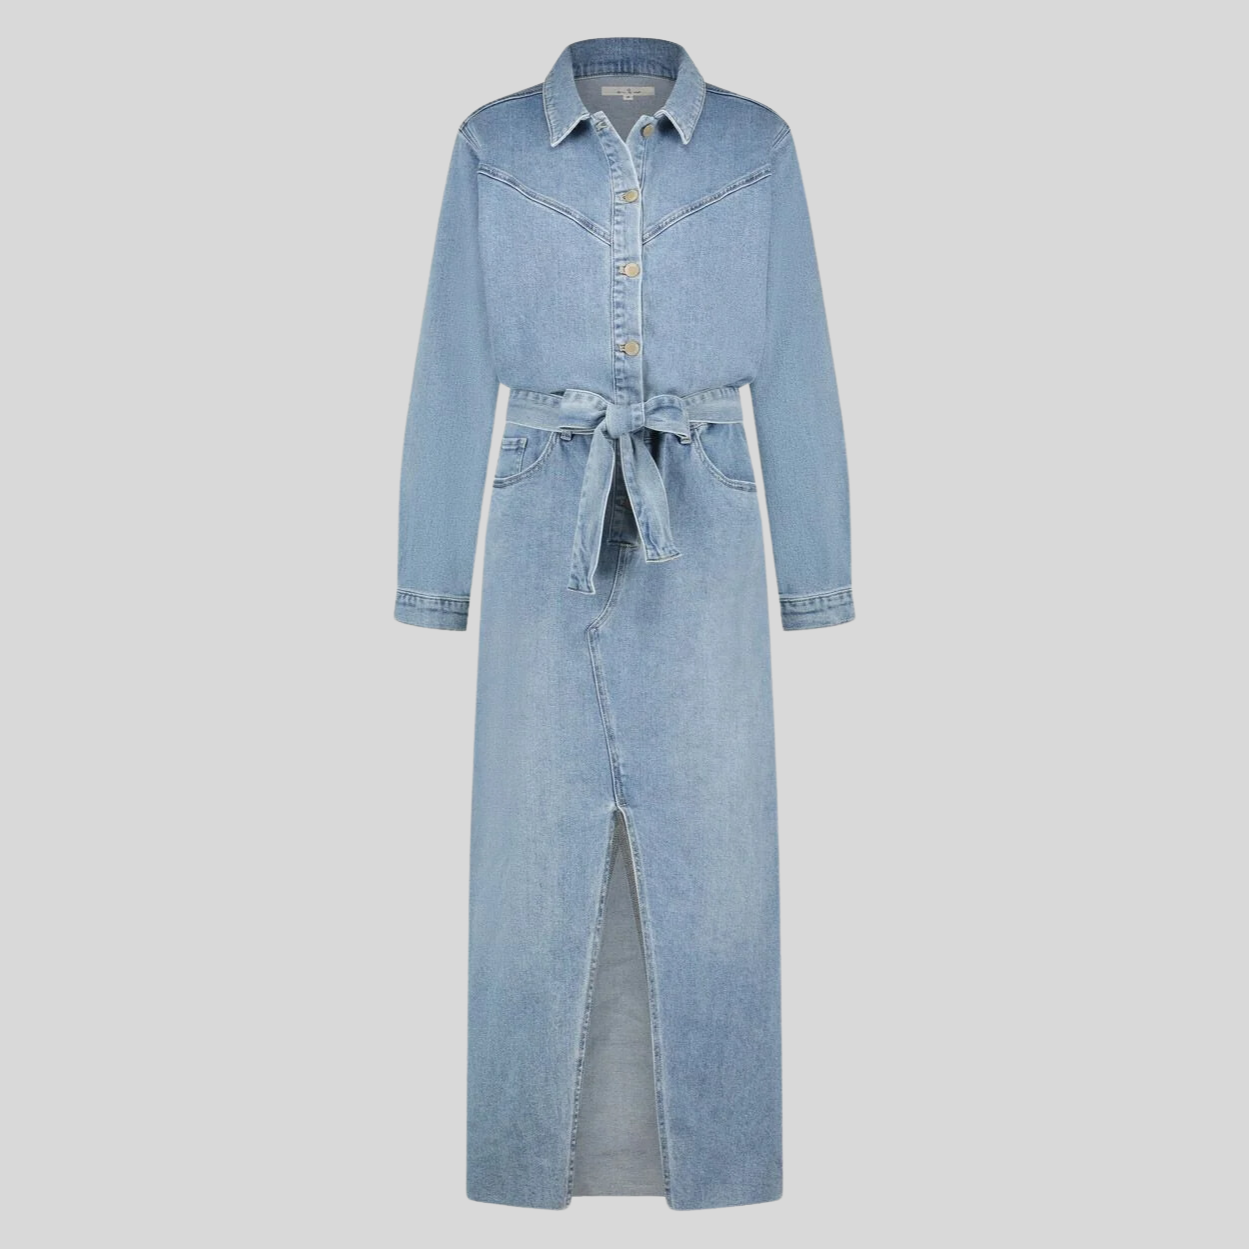 Gotstyle Fashion - Circle Of Trust Dresses Loose Fit Front Split Belted Denim Dress - Blue